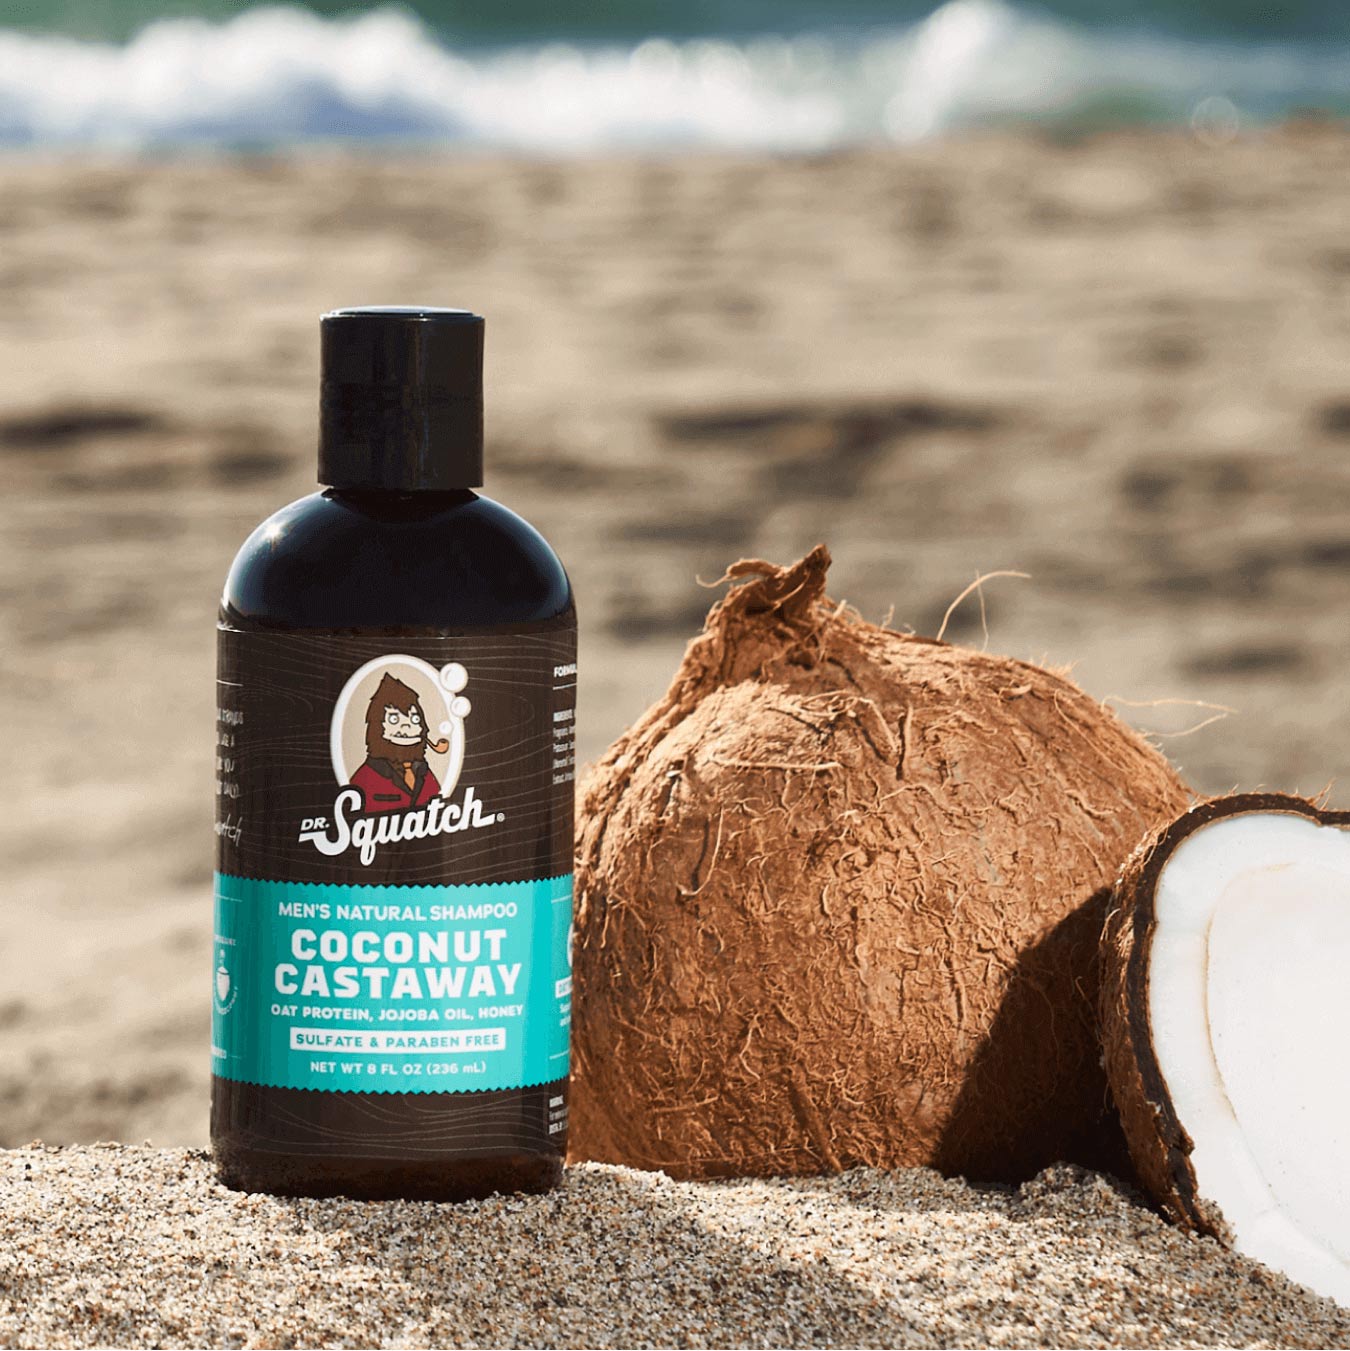 Dr. Squatch Coconut Castaway Soap - 5oz Free Shipping